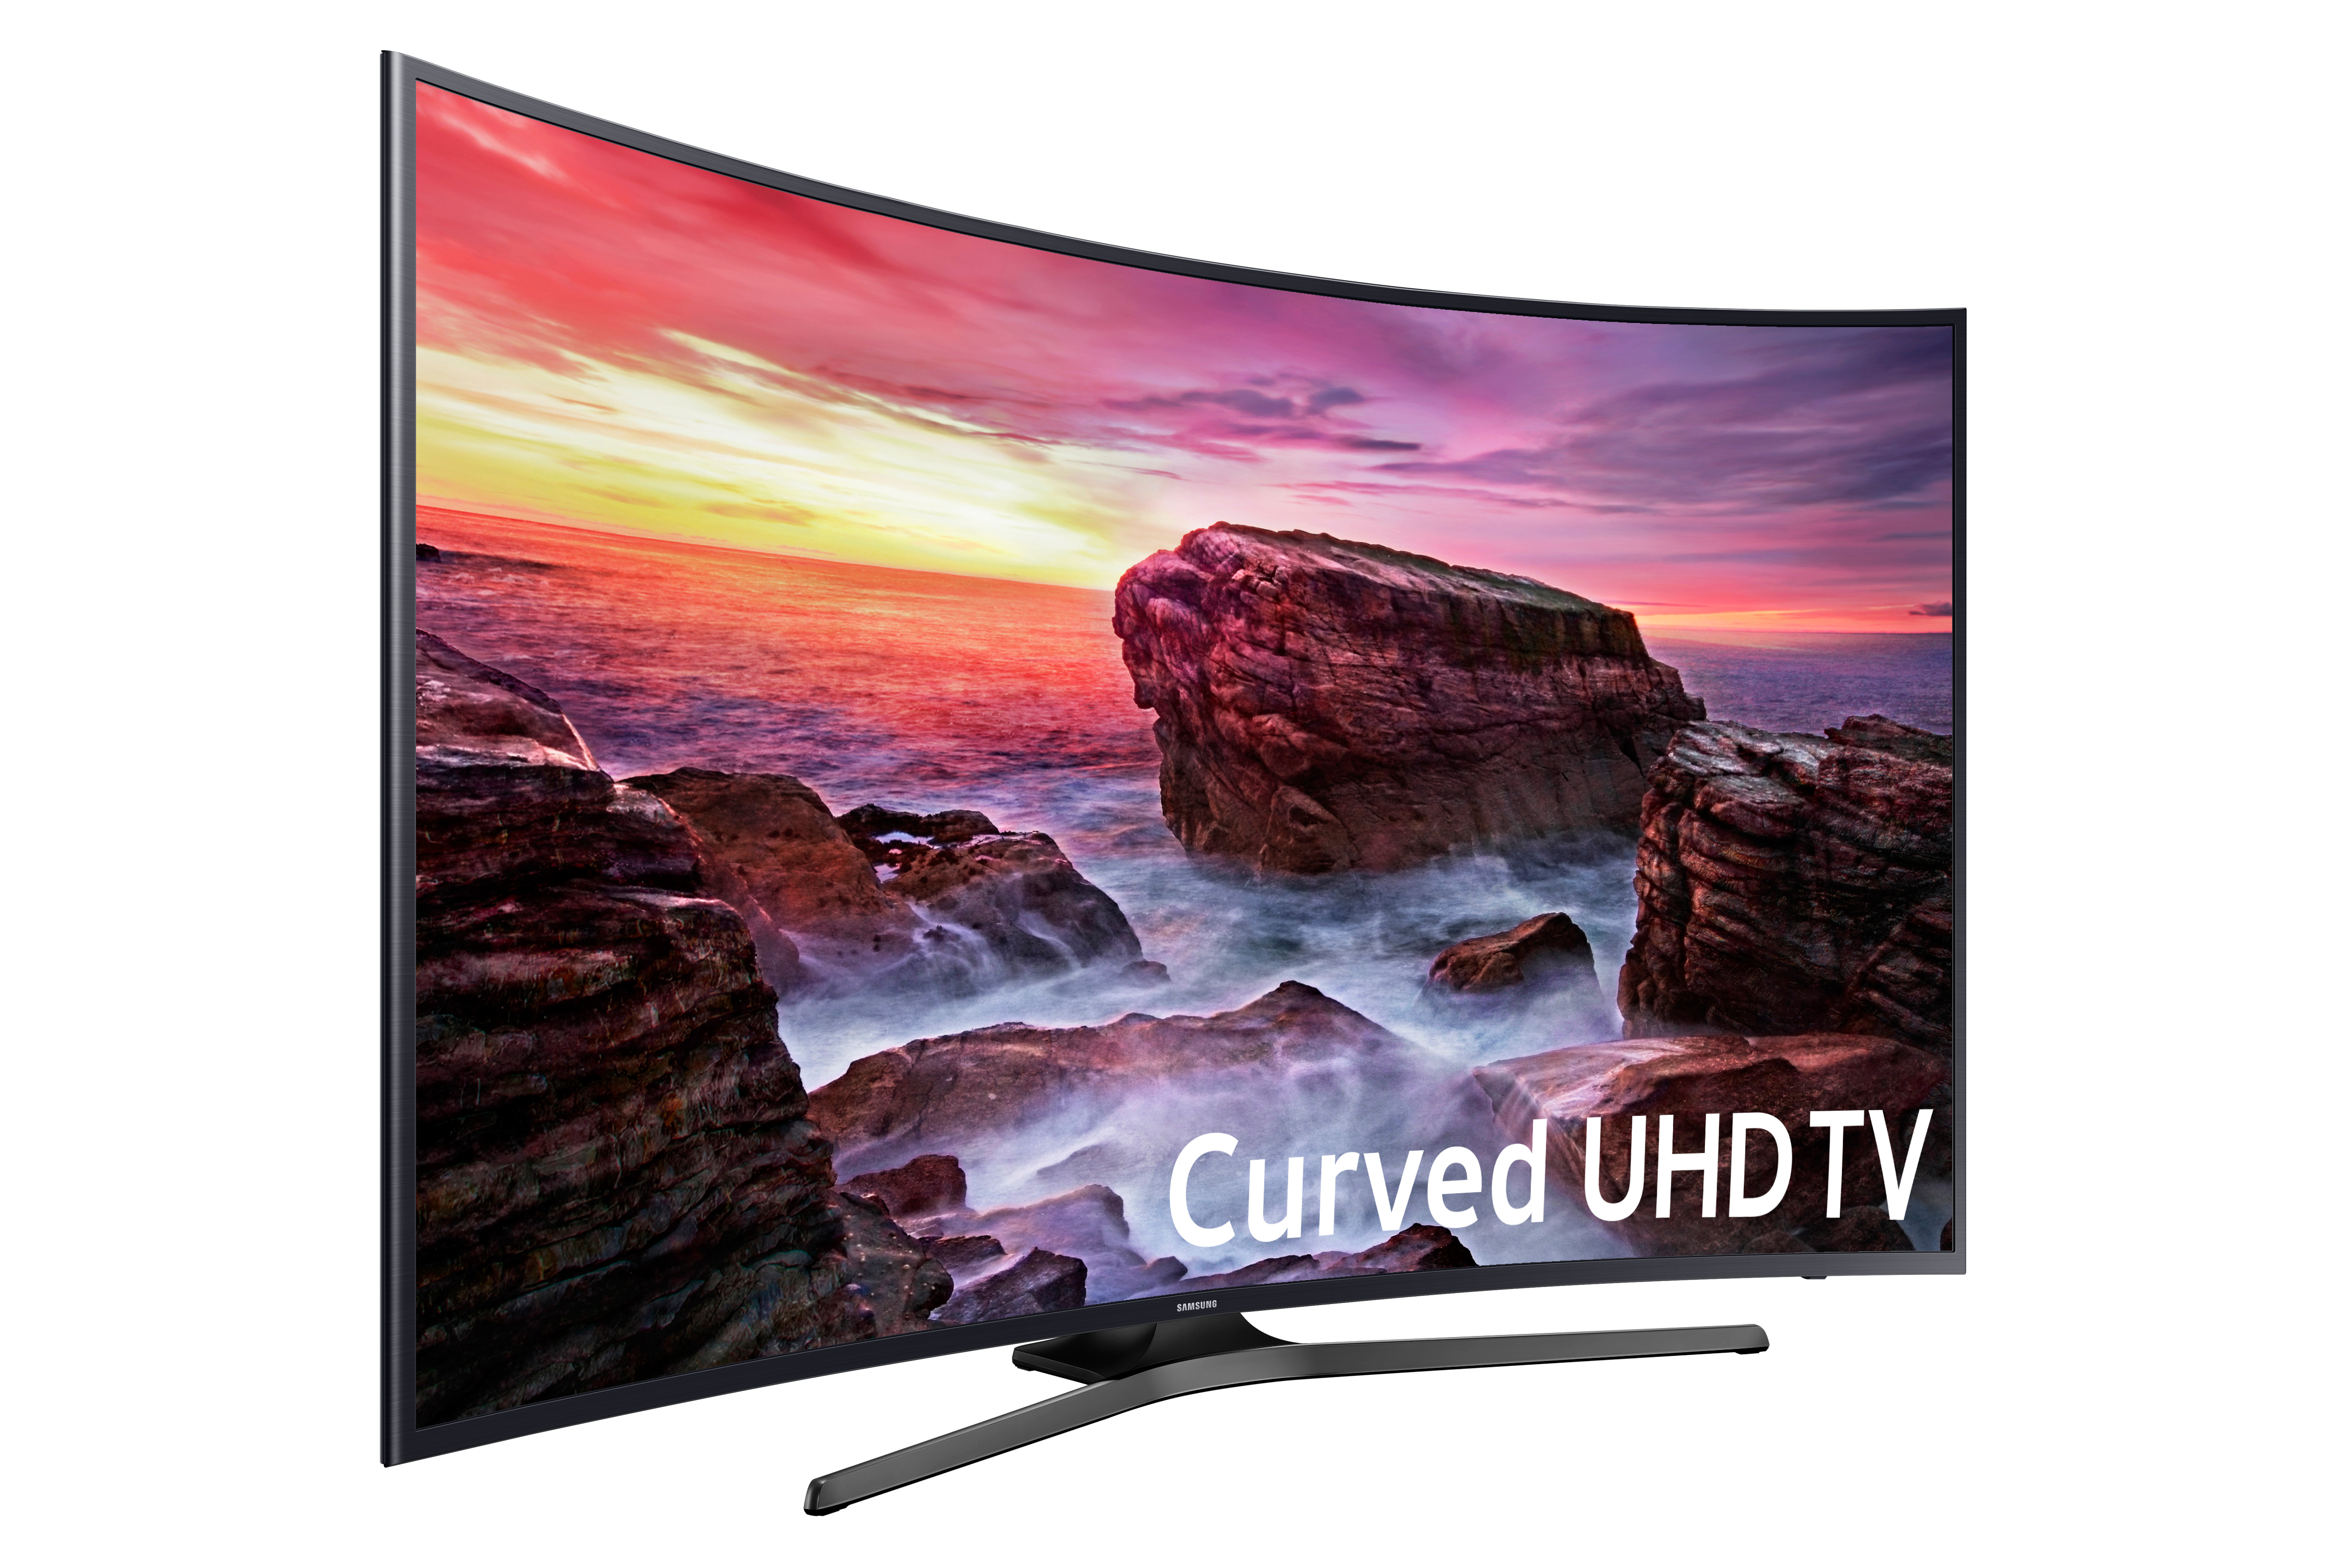 SAMSUNG 55" Class Curved 4K (2160P) Ultra HD Smart LED TV (UN55MU6490) - image 2 of 11